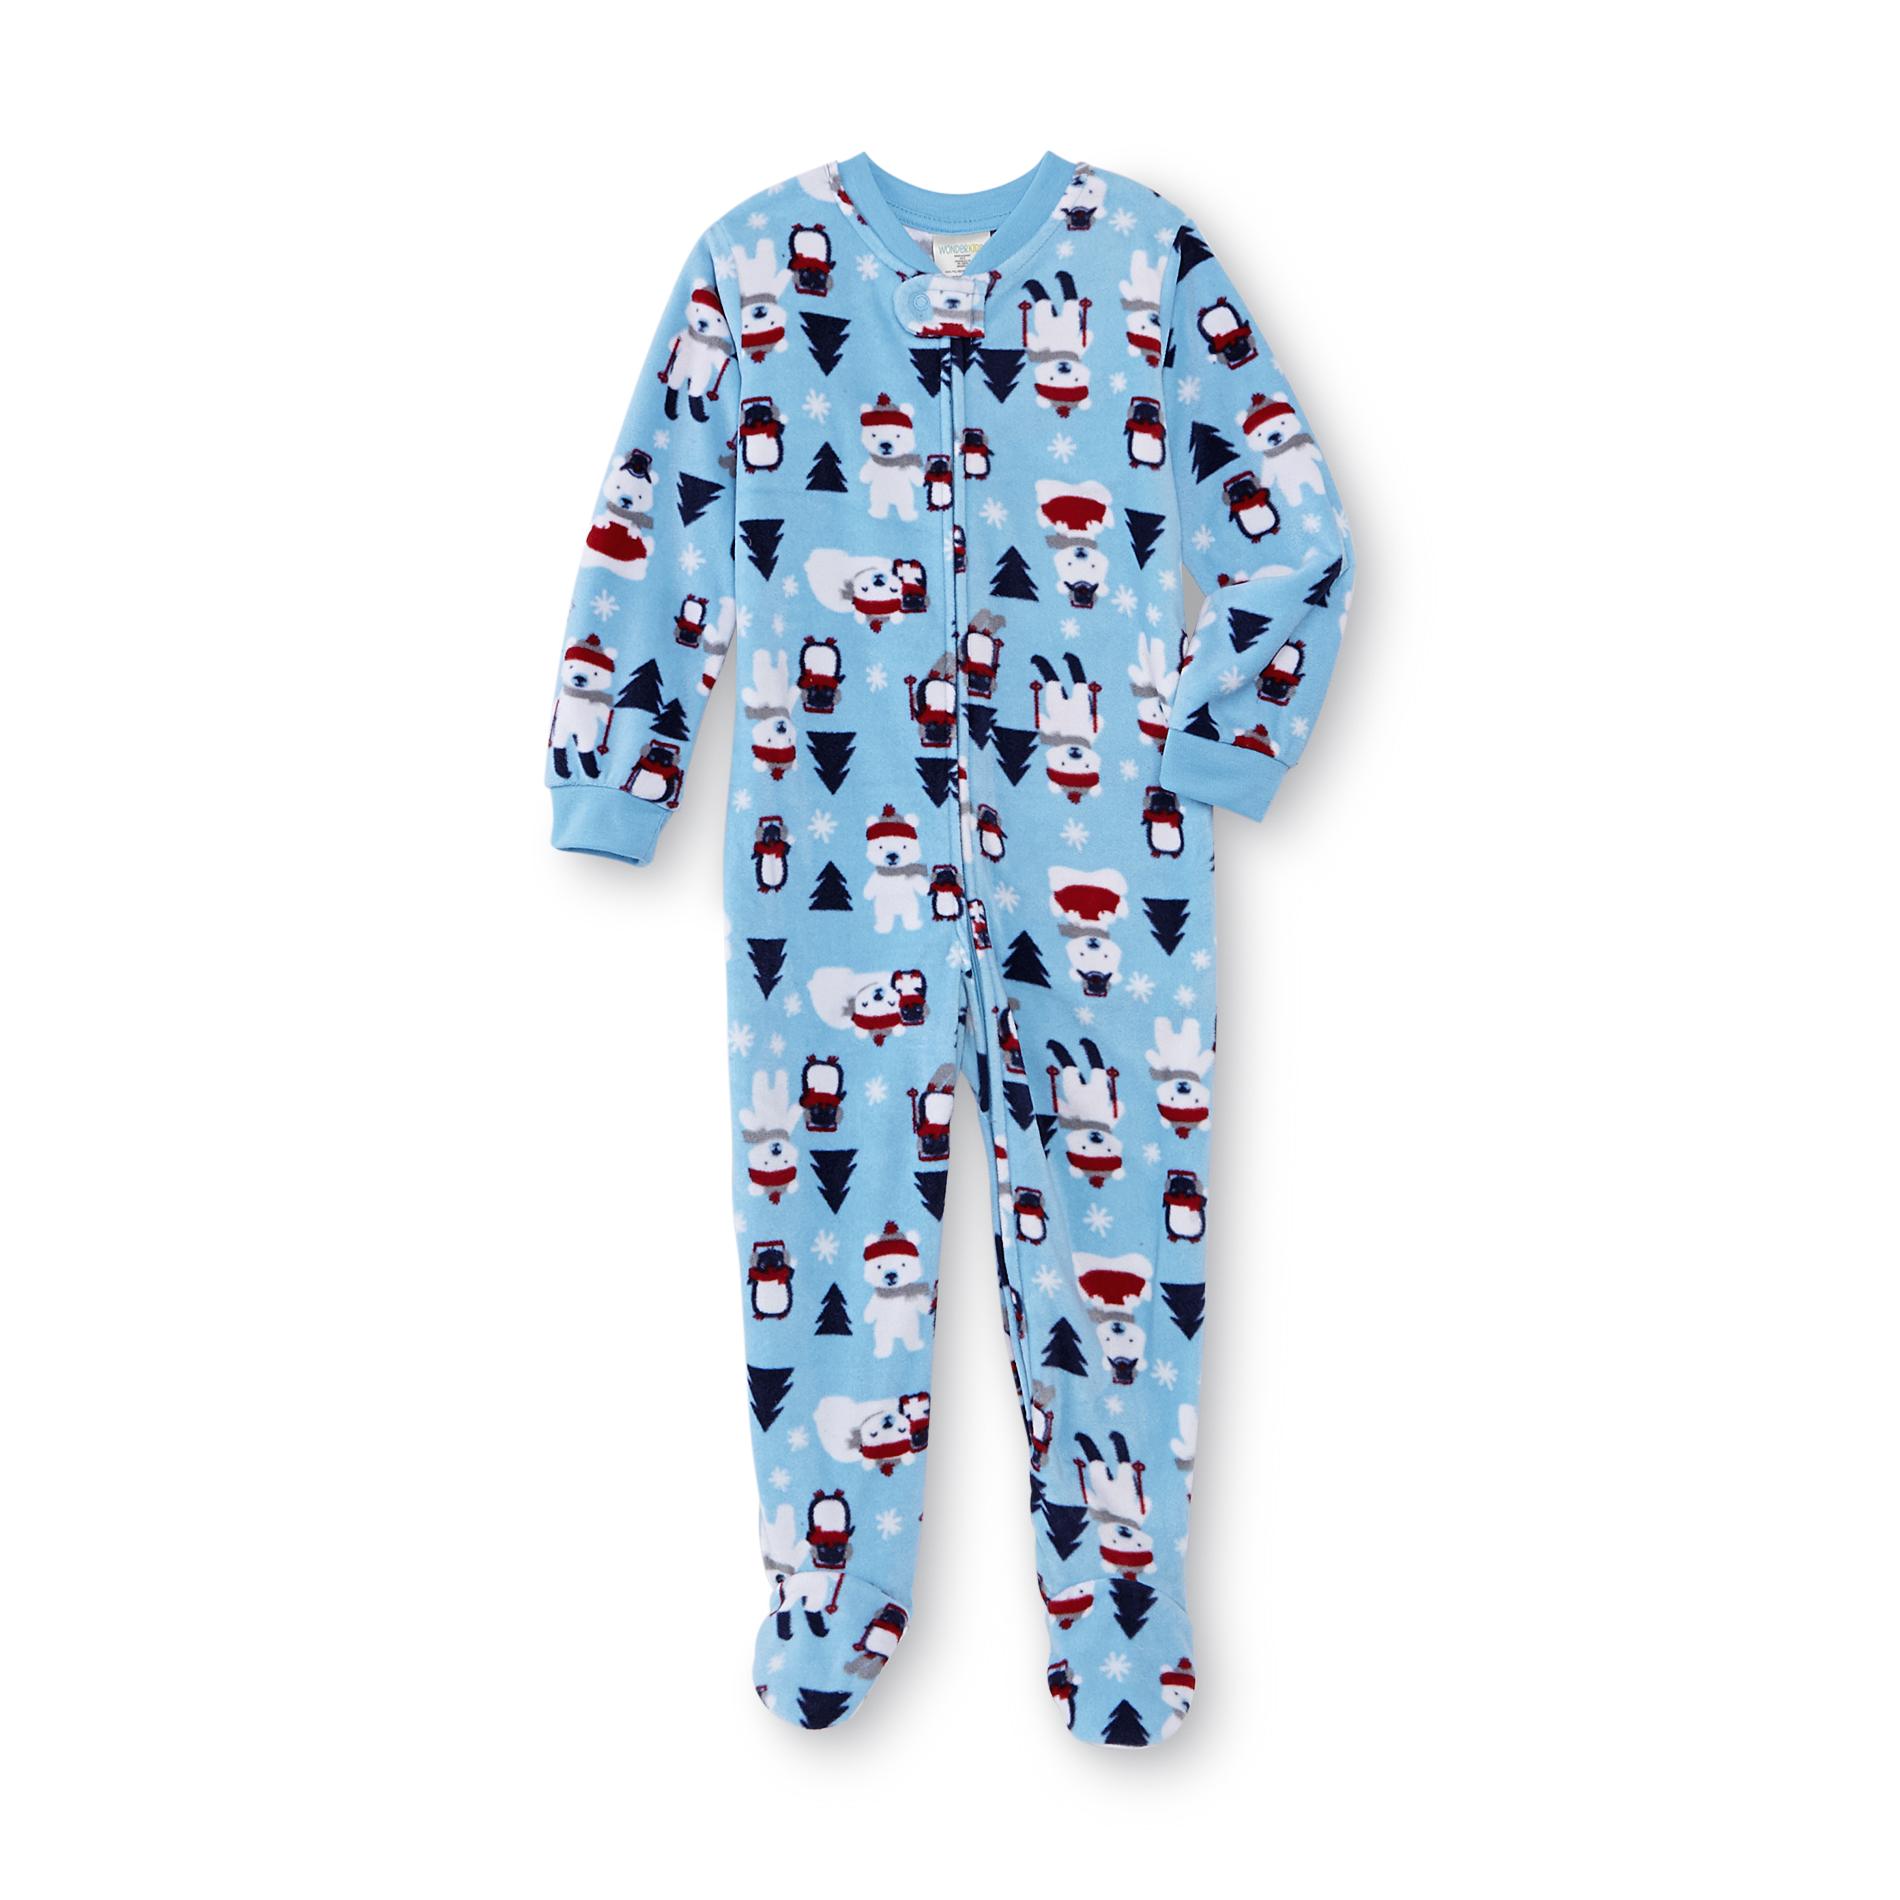 Infant & Toddler's Fleece Sleeper Pajamas - Polar Bears & Penguins